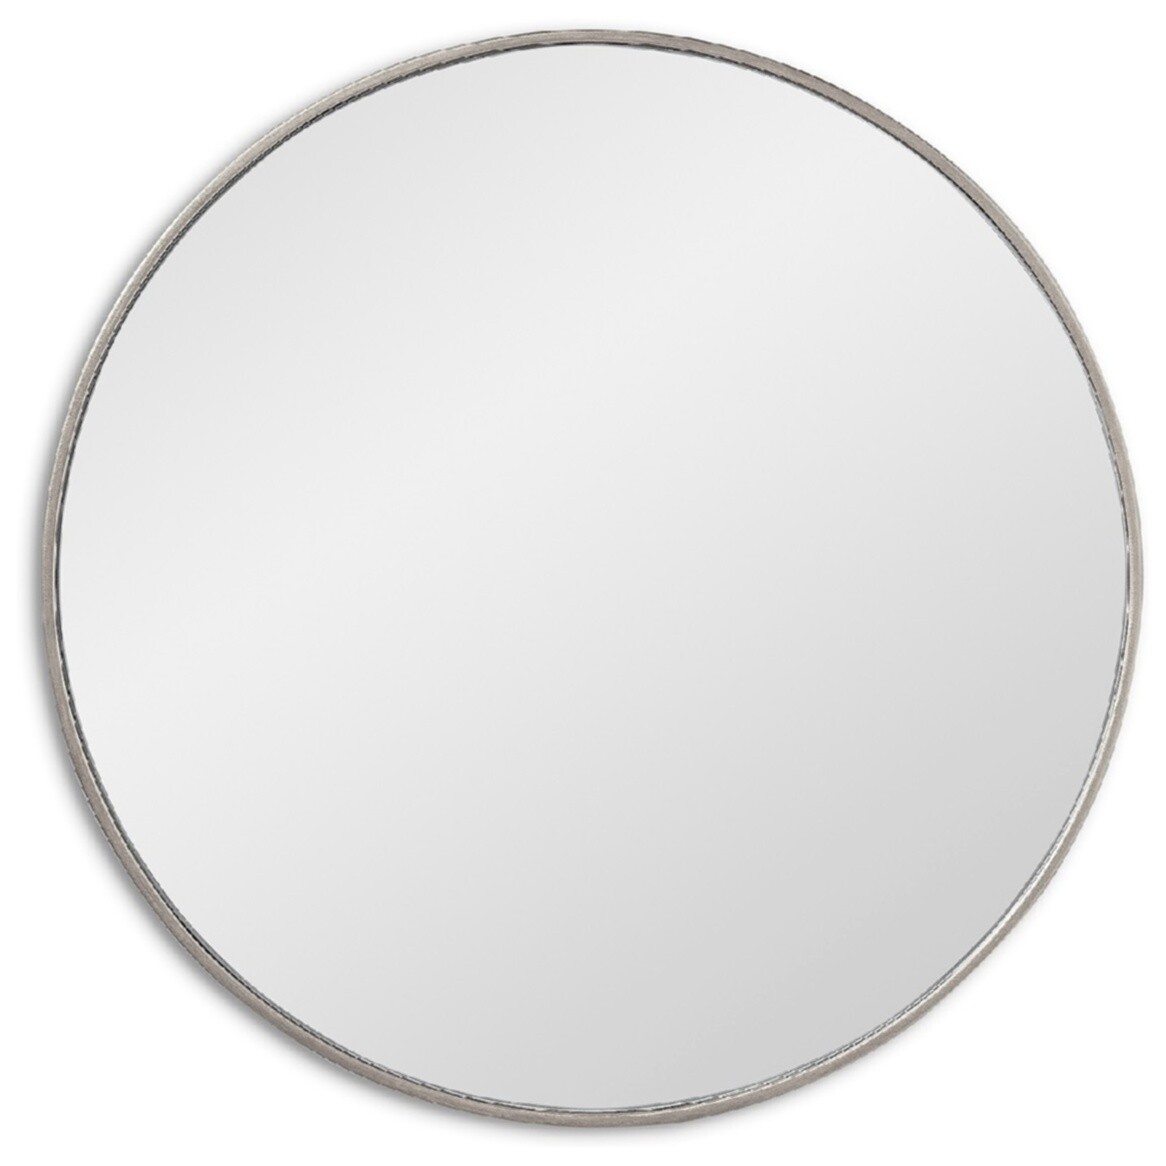 Зеркало настенное круглое в тонкой раме 40 см серебро Ala XS Silver Smal